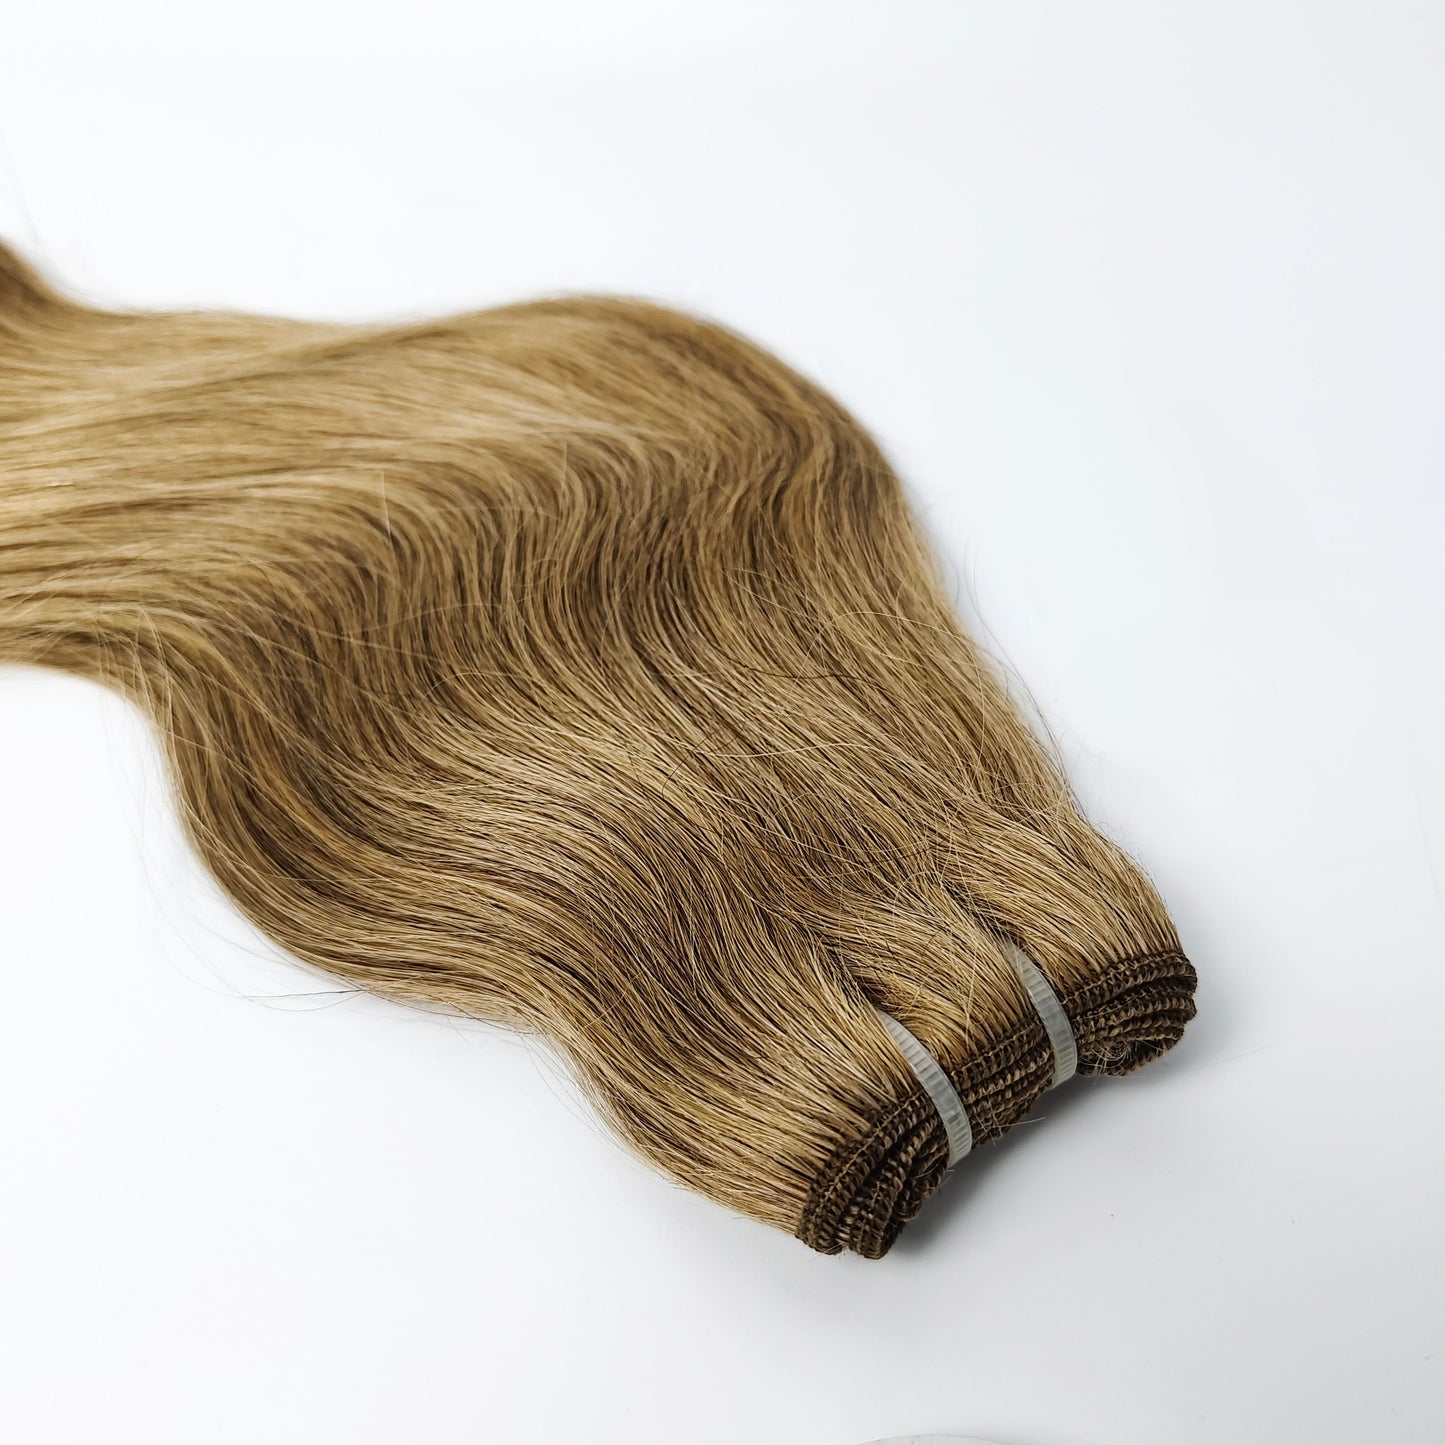 Color Hair Virgin Human Hair Extension Bundles